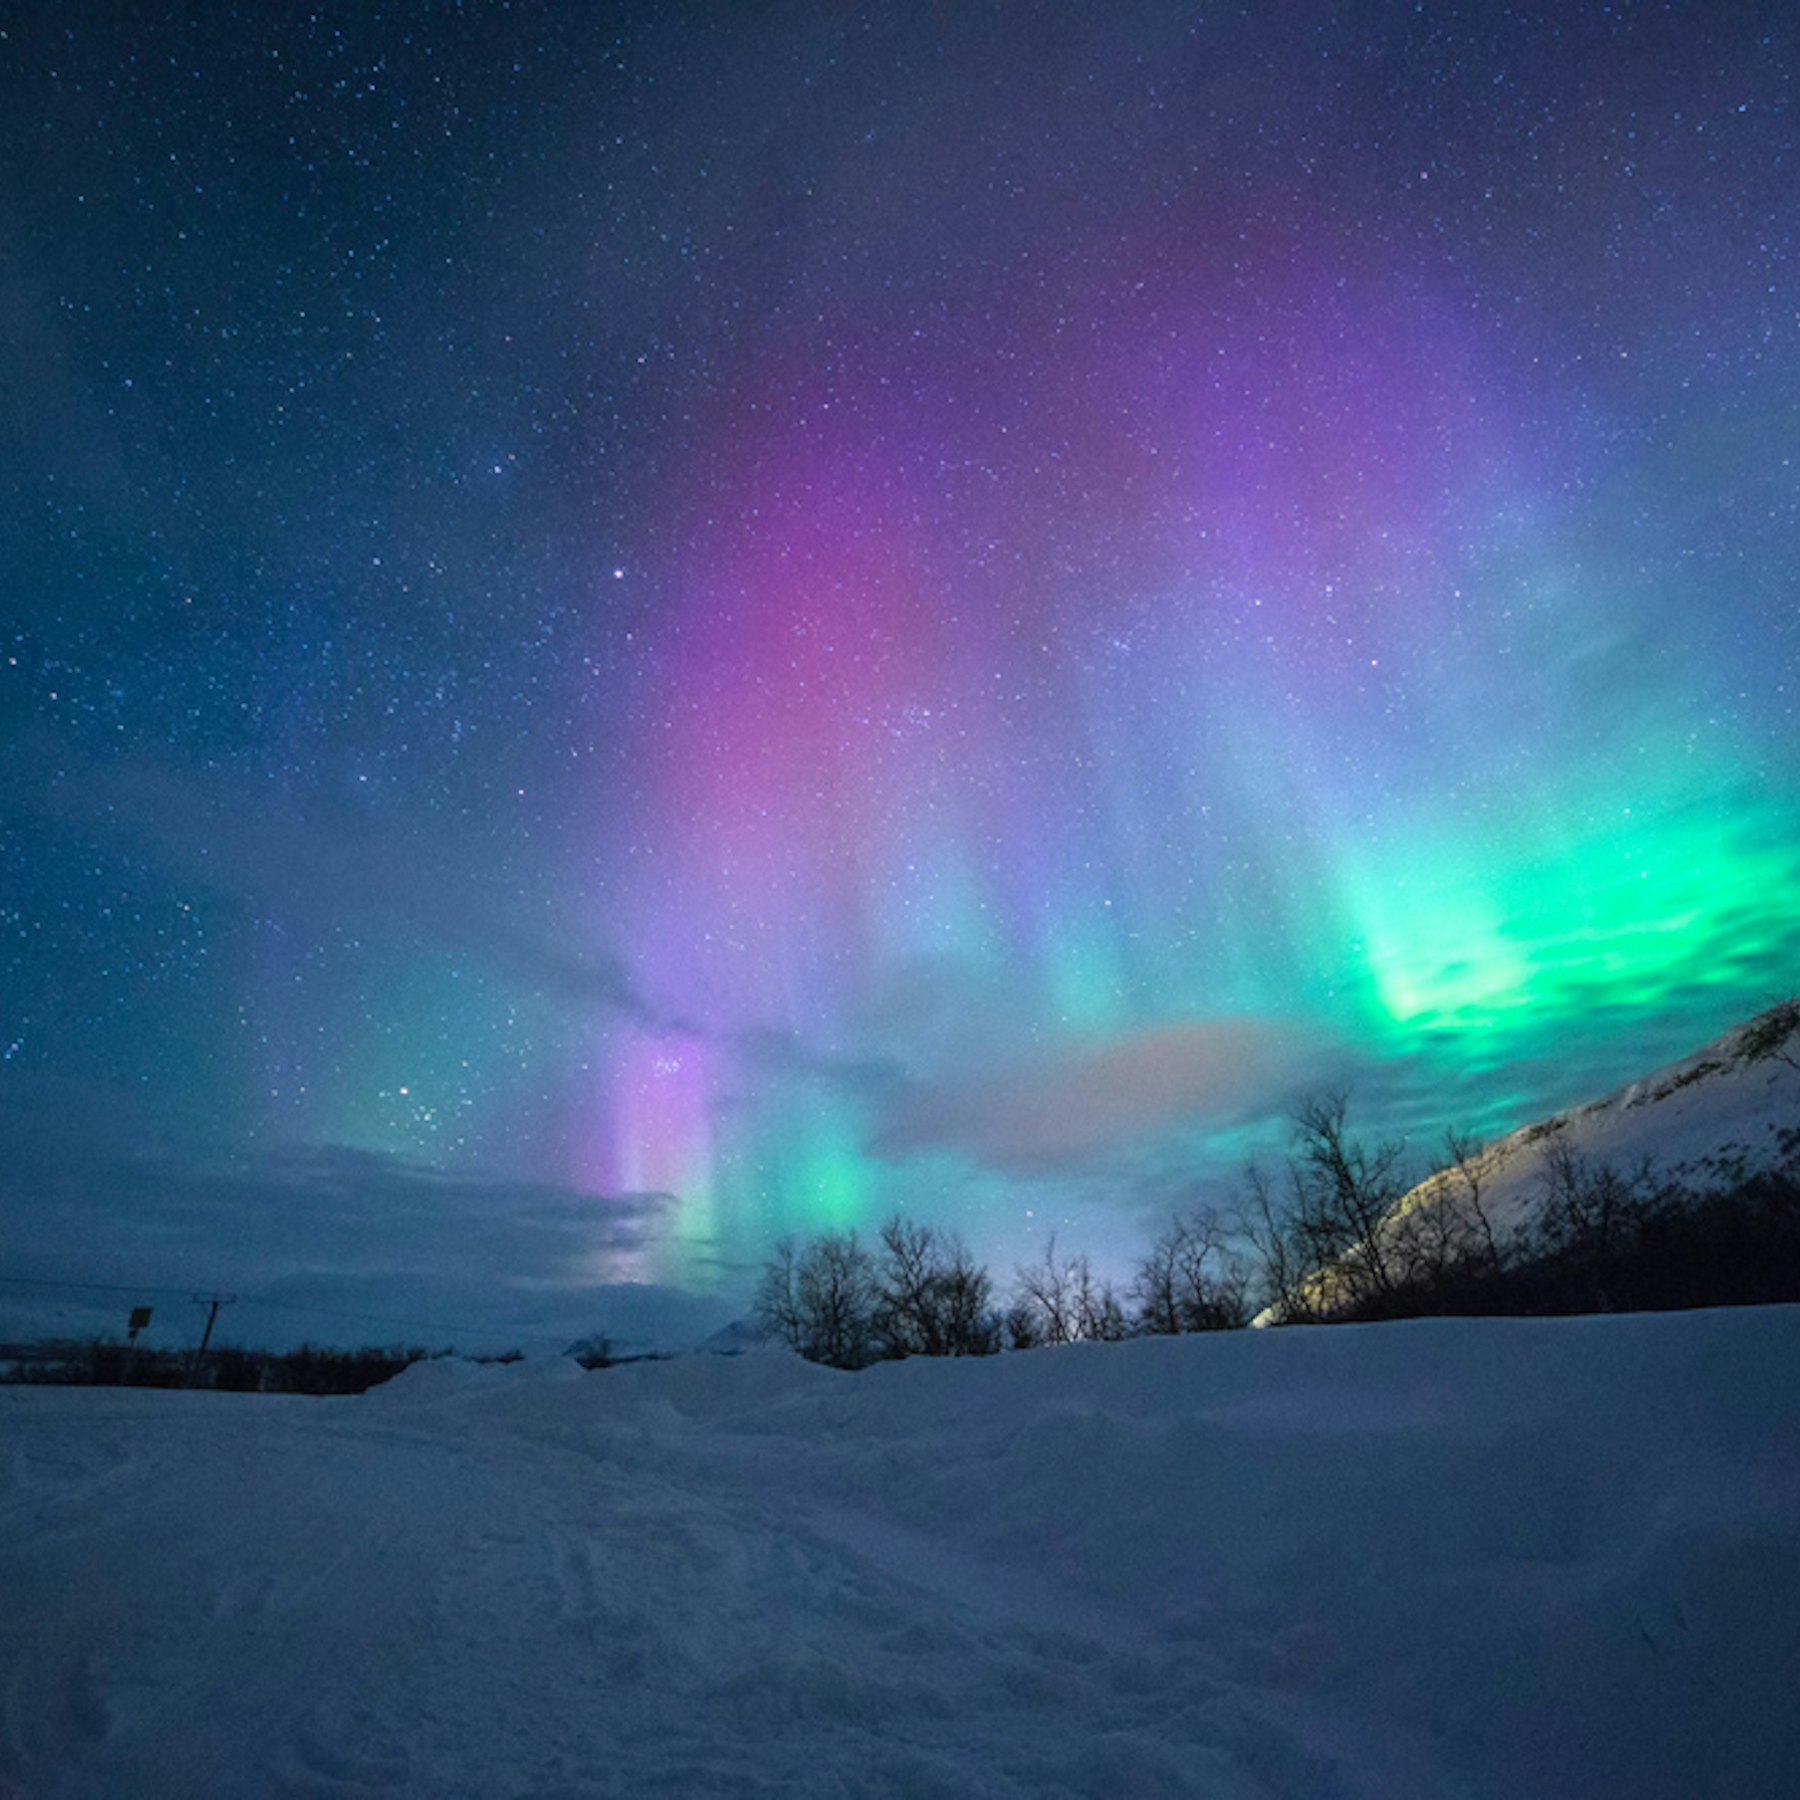 Iceland lights